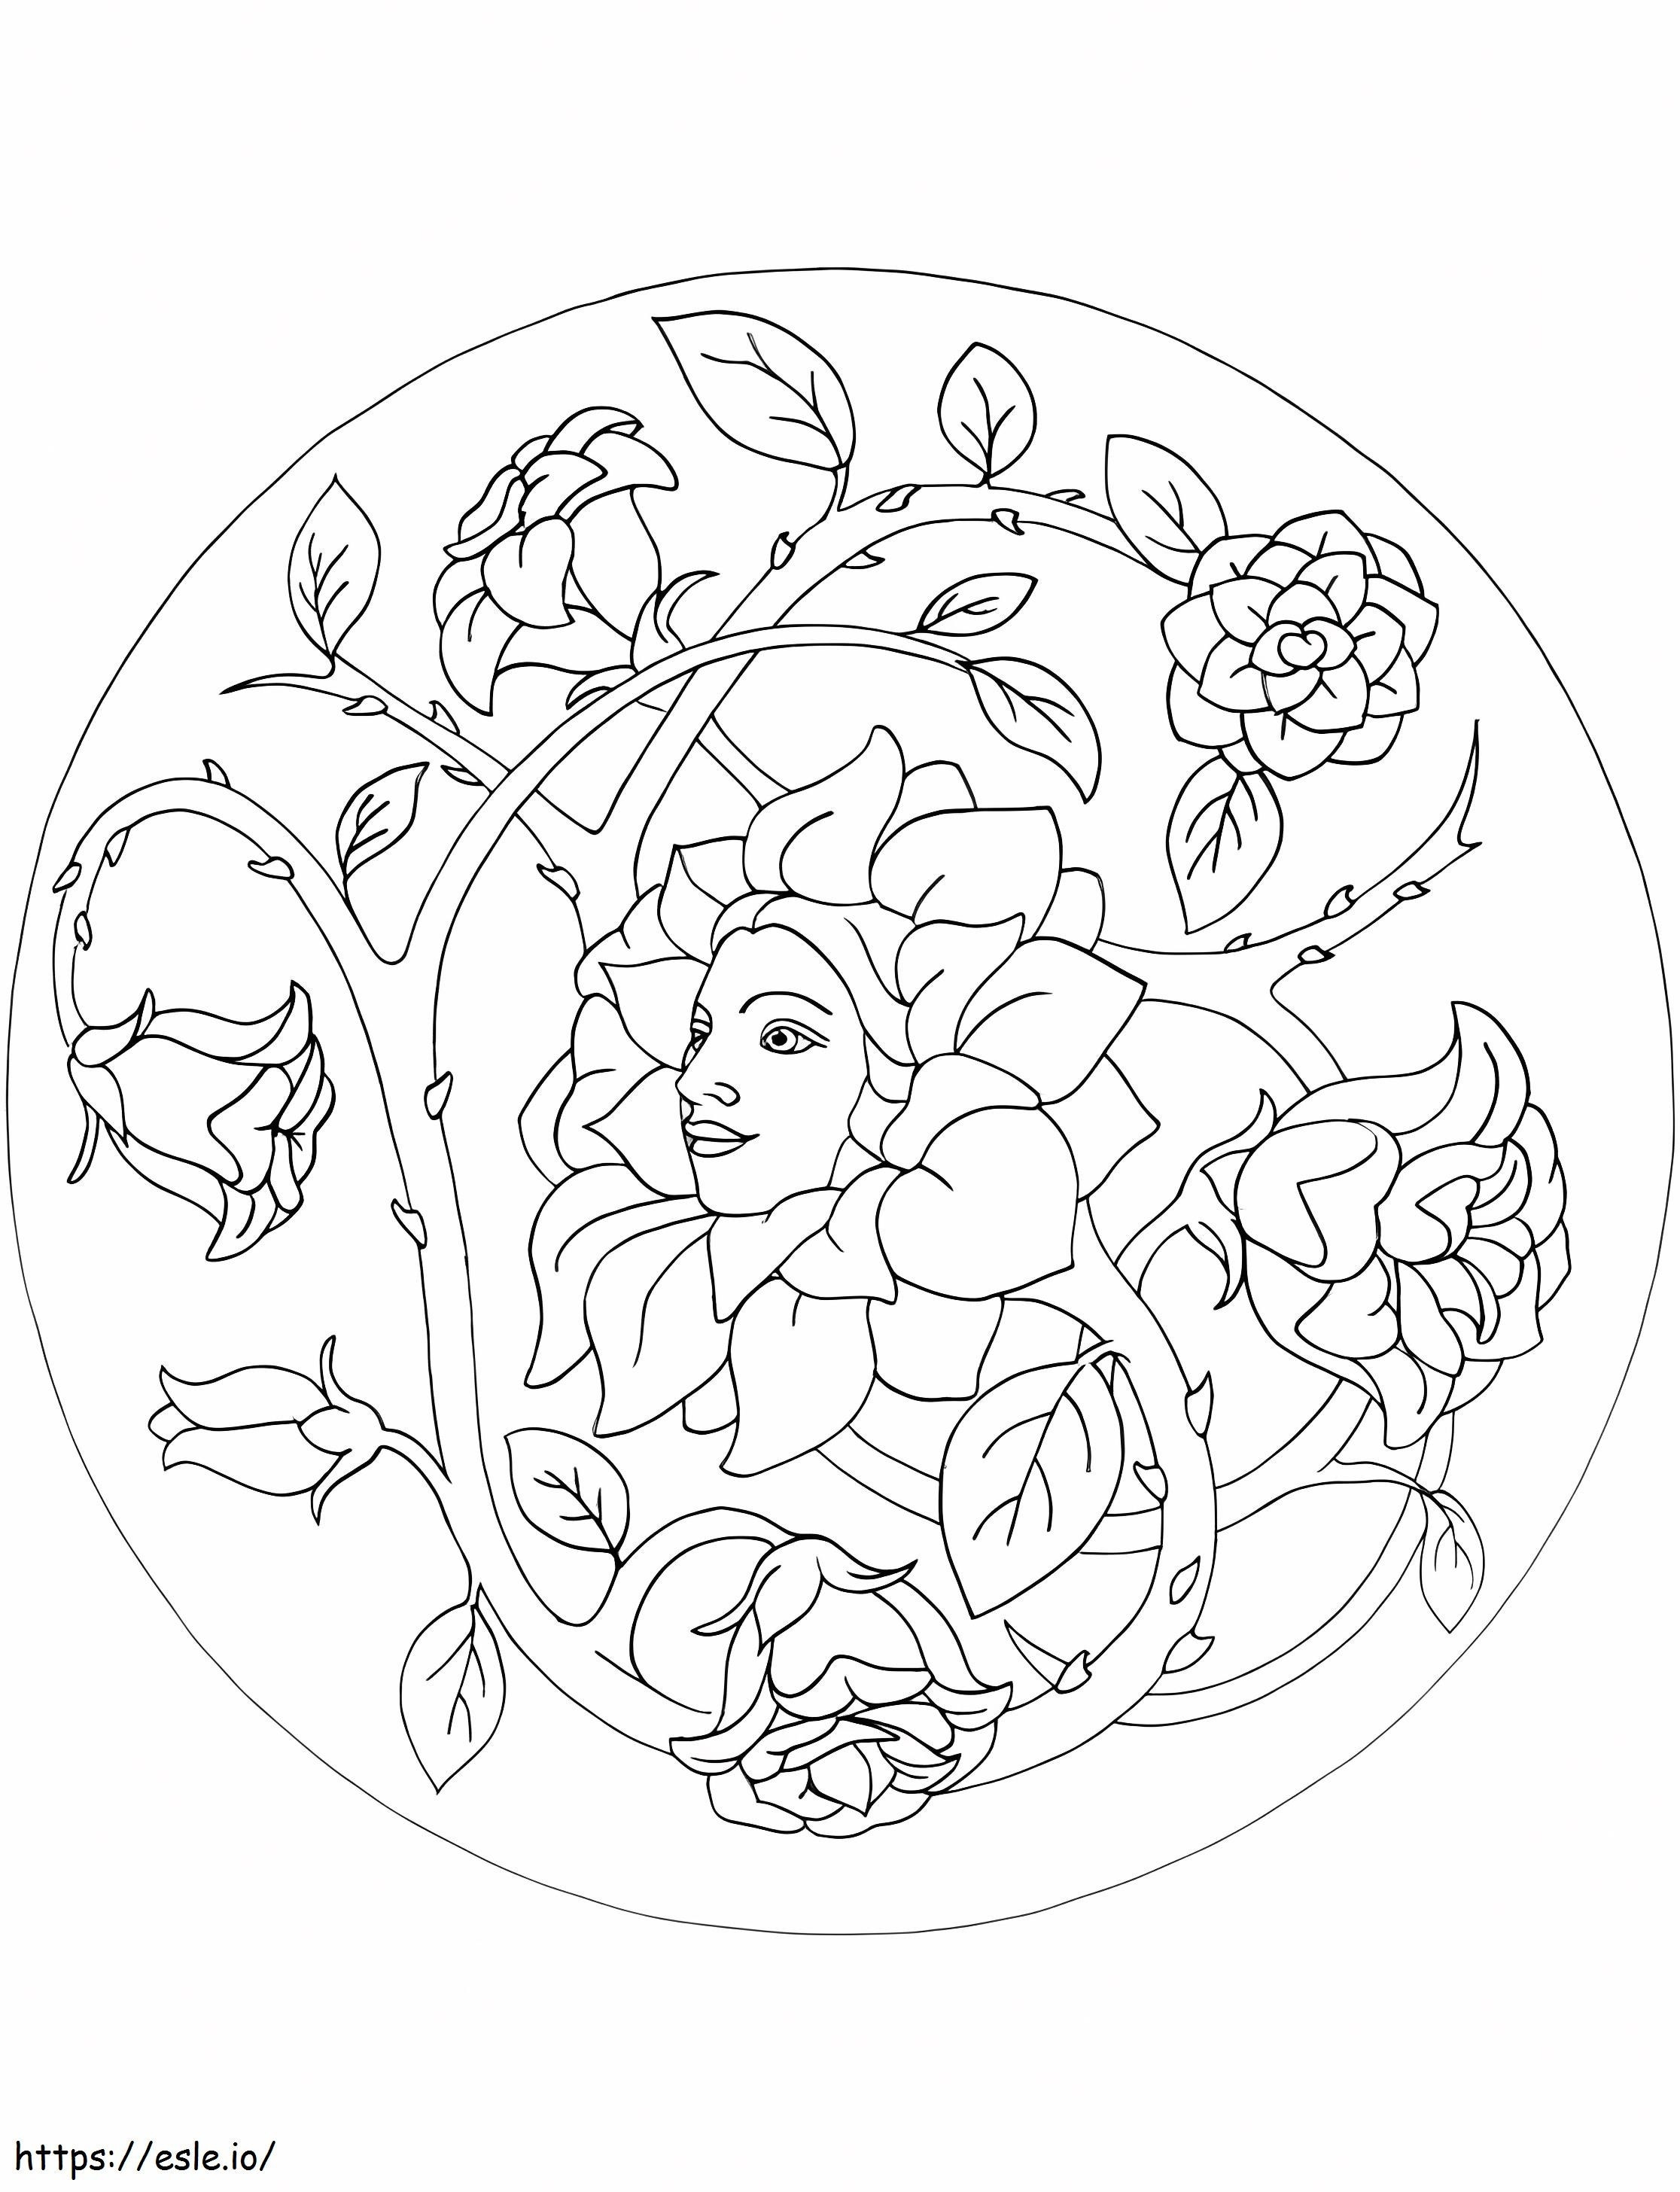 Mandala de flores para imprimir gratis para colorear